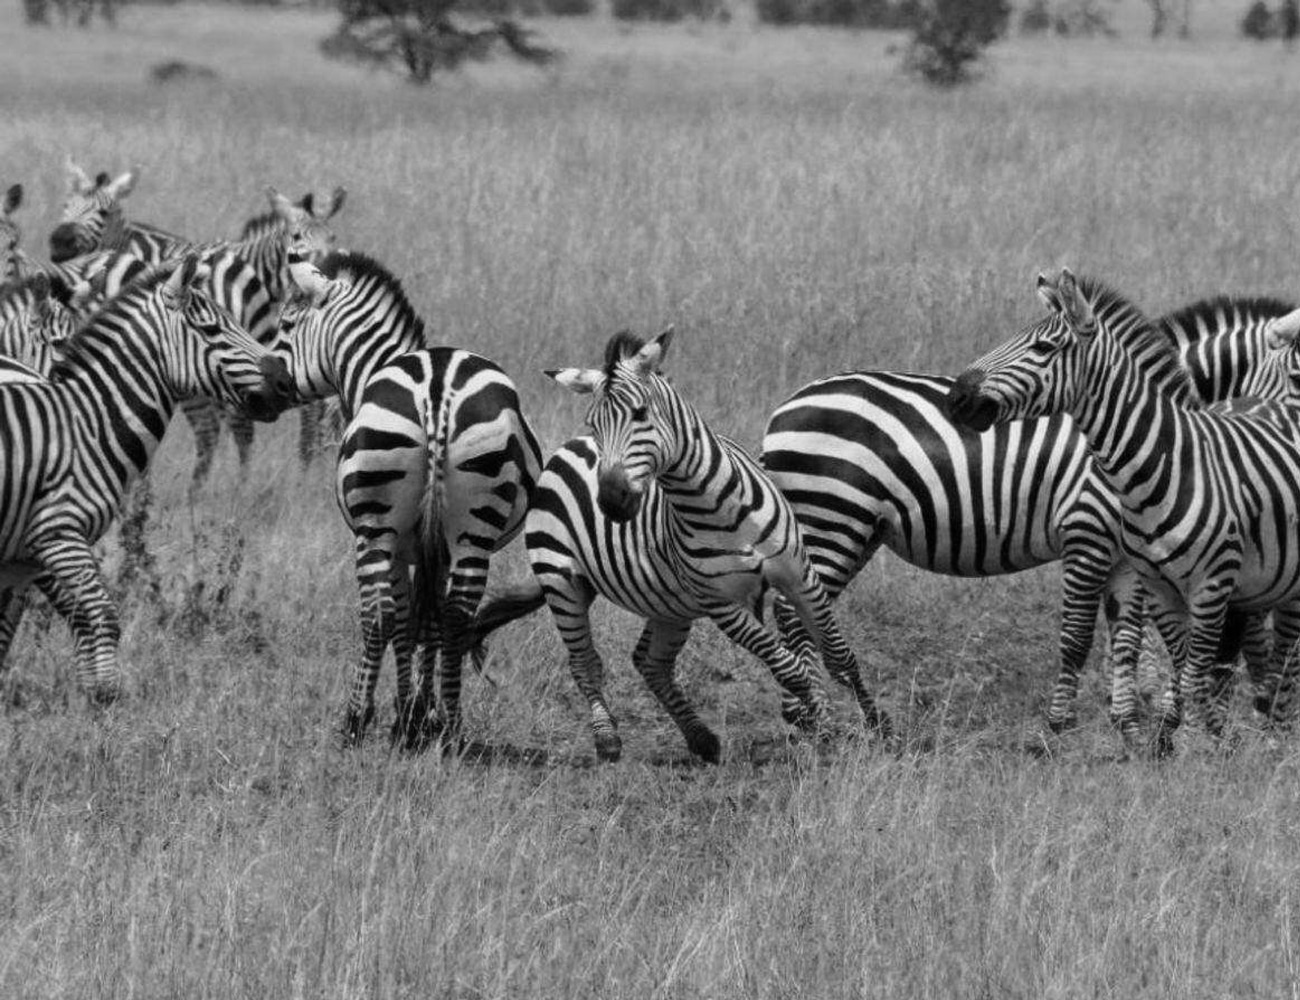 Zebras at the Serengeti National Park